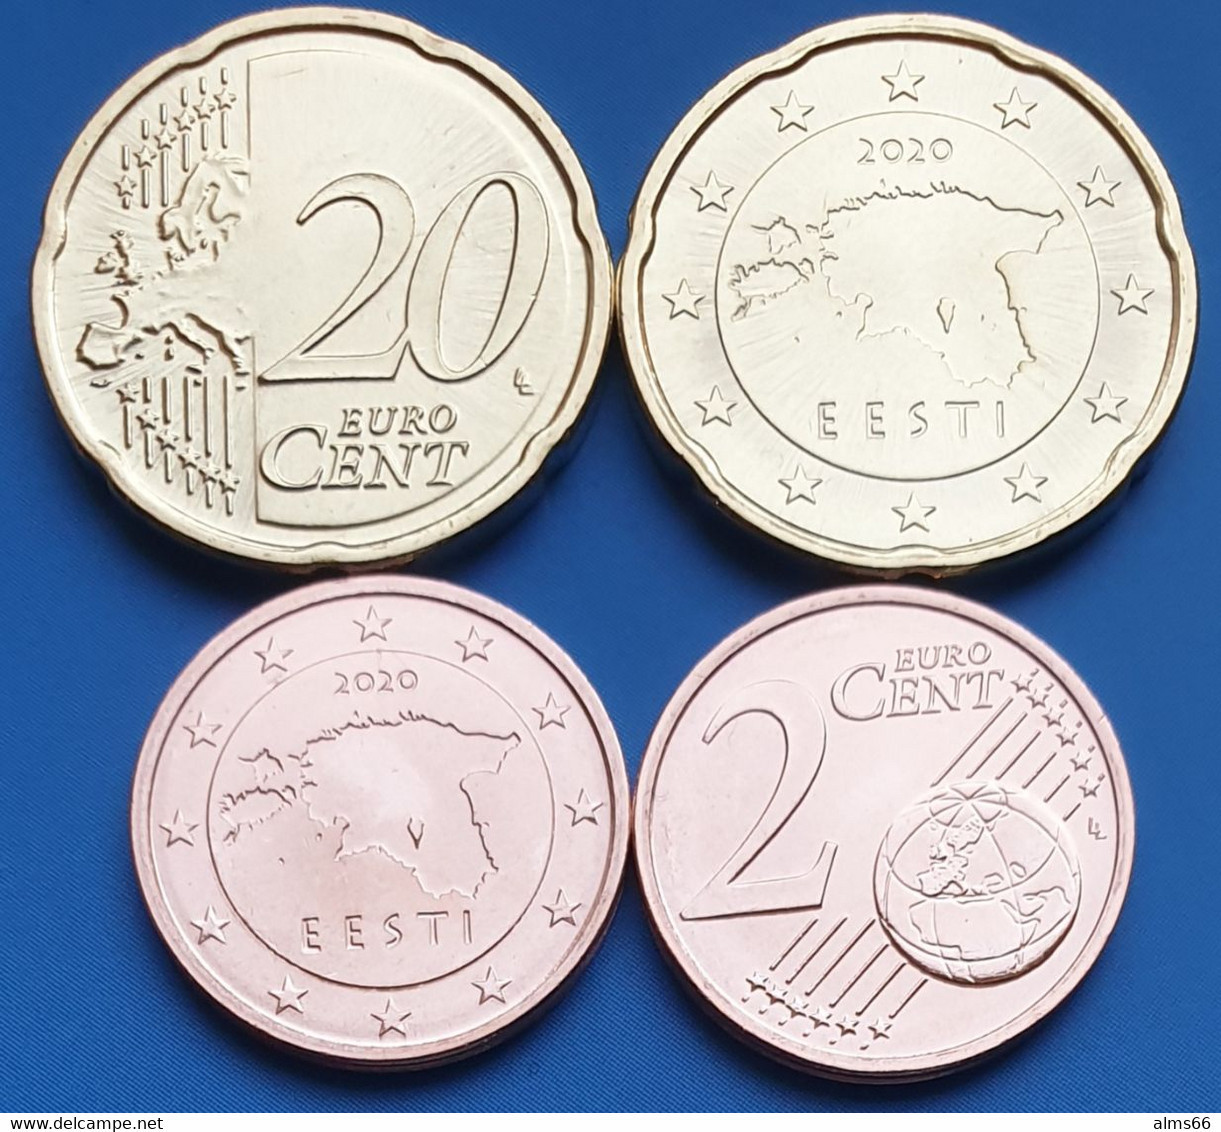 Eurocoins Estonia 2 + 20 Cents 2020 UNC ( Set 2 Coins) - Estland